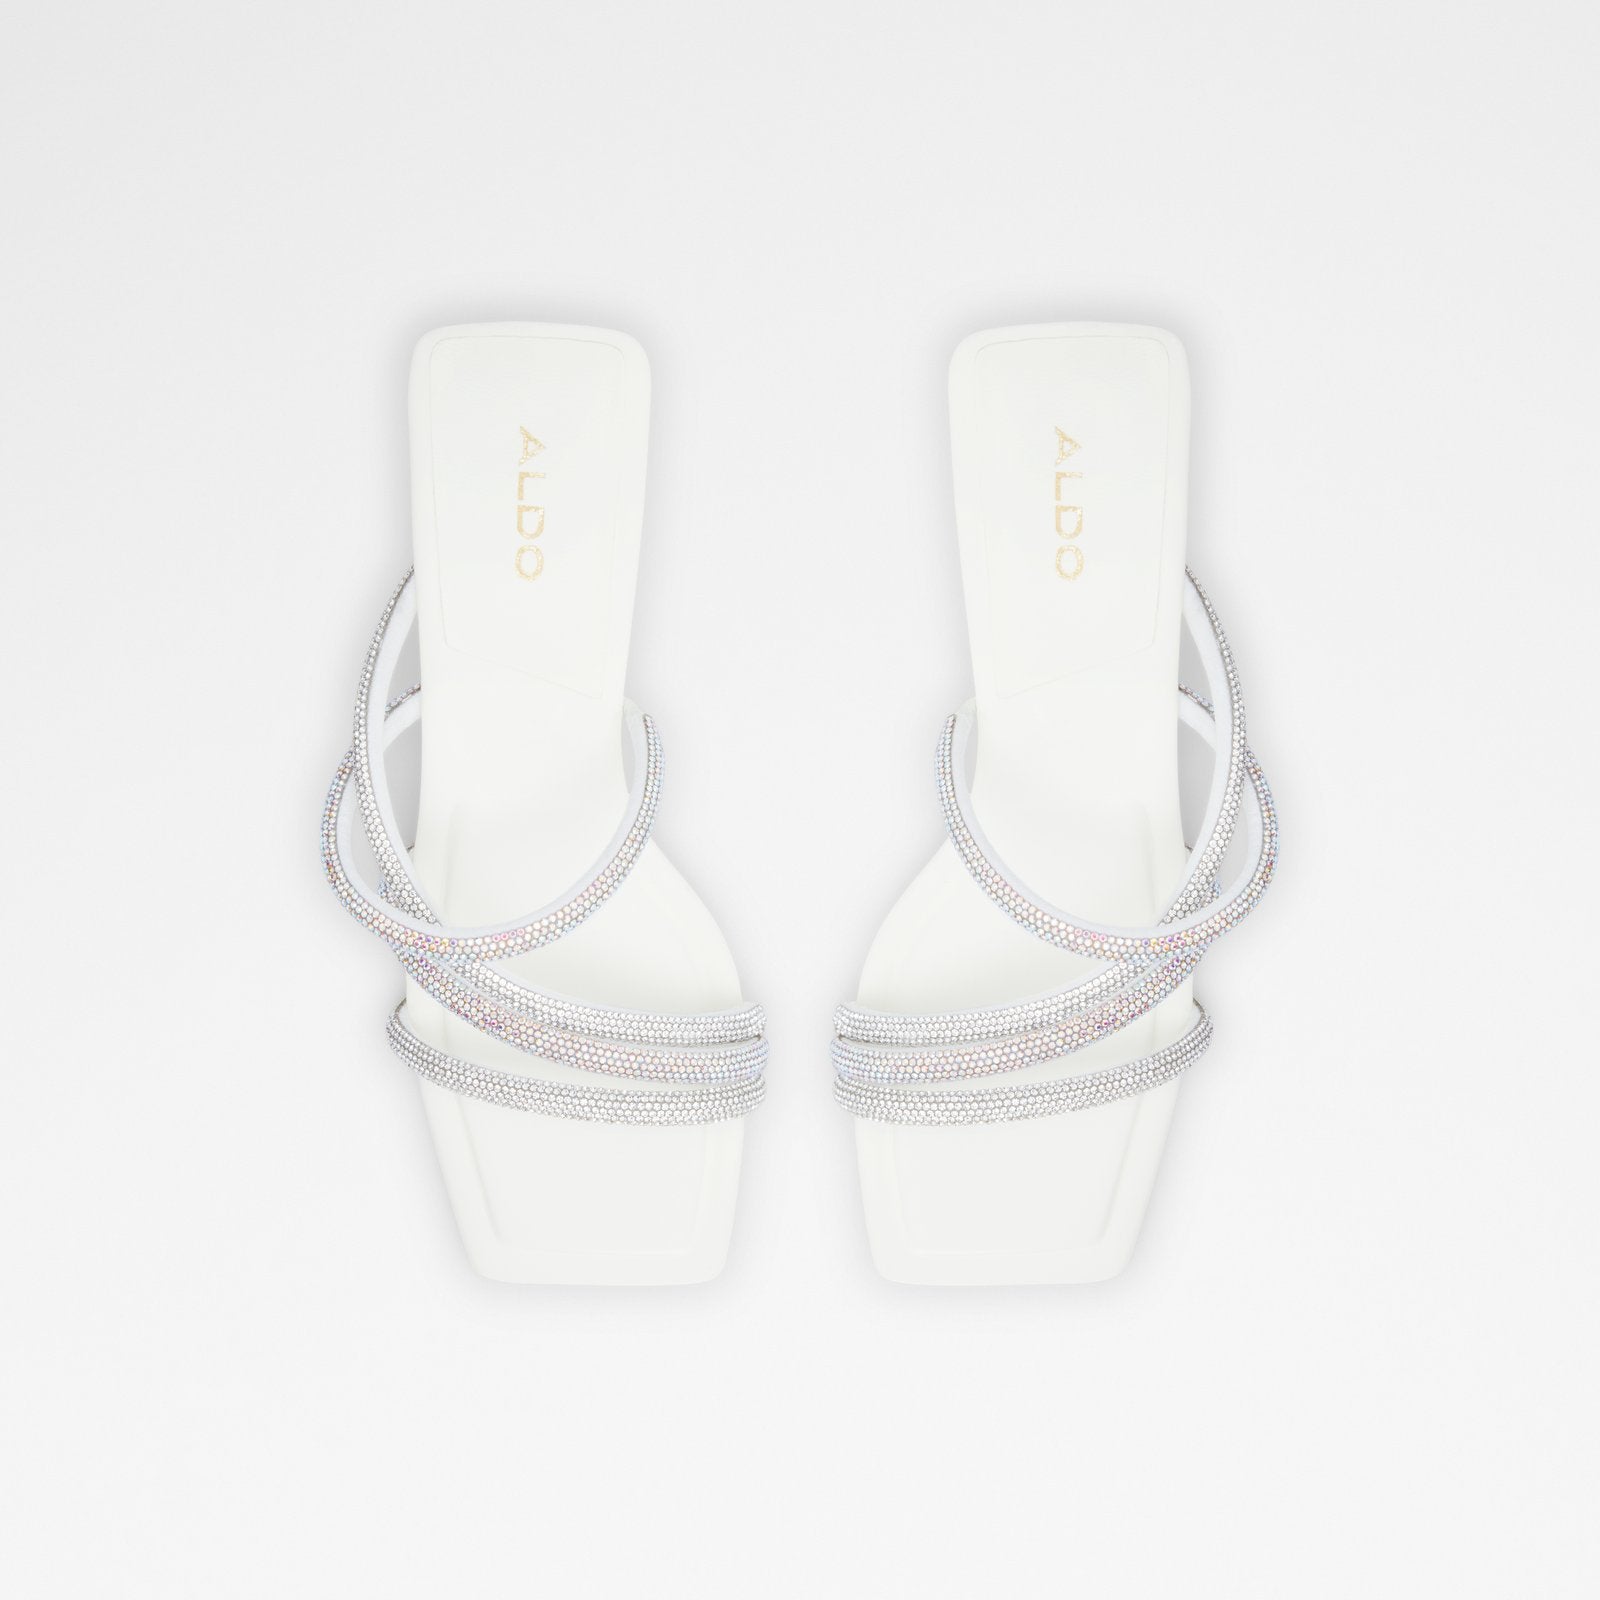 Pierida Women Shoes - White - ALDO KSA